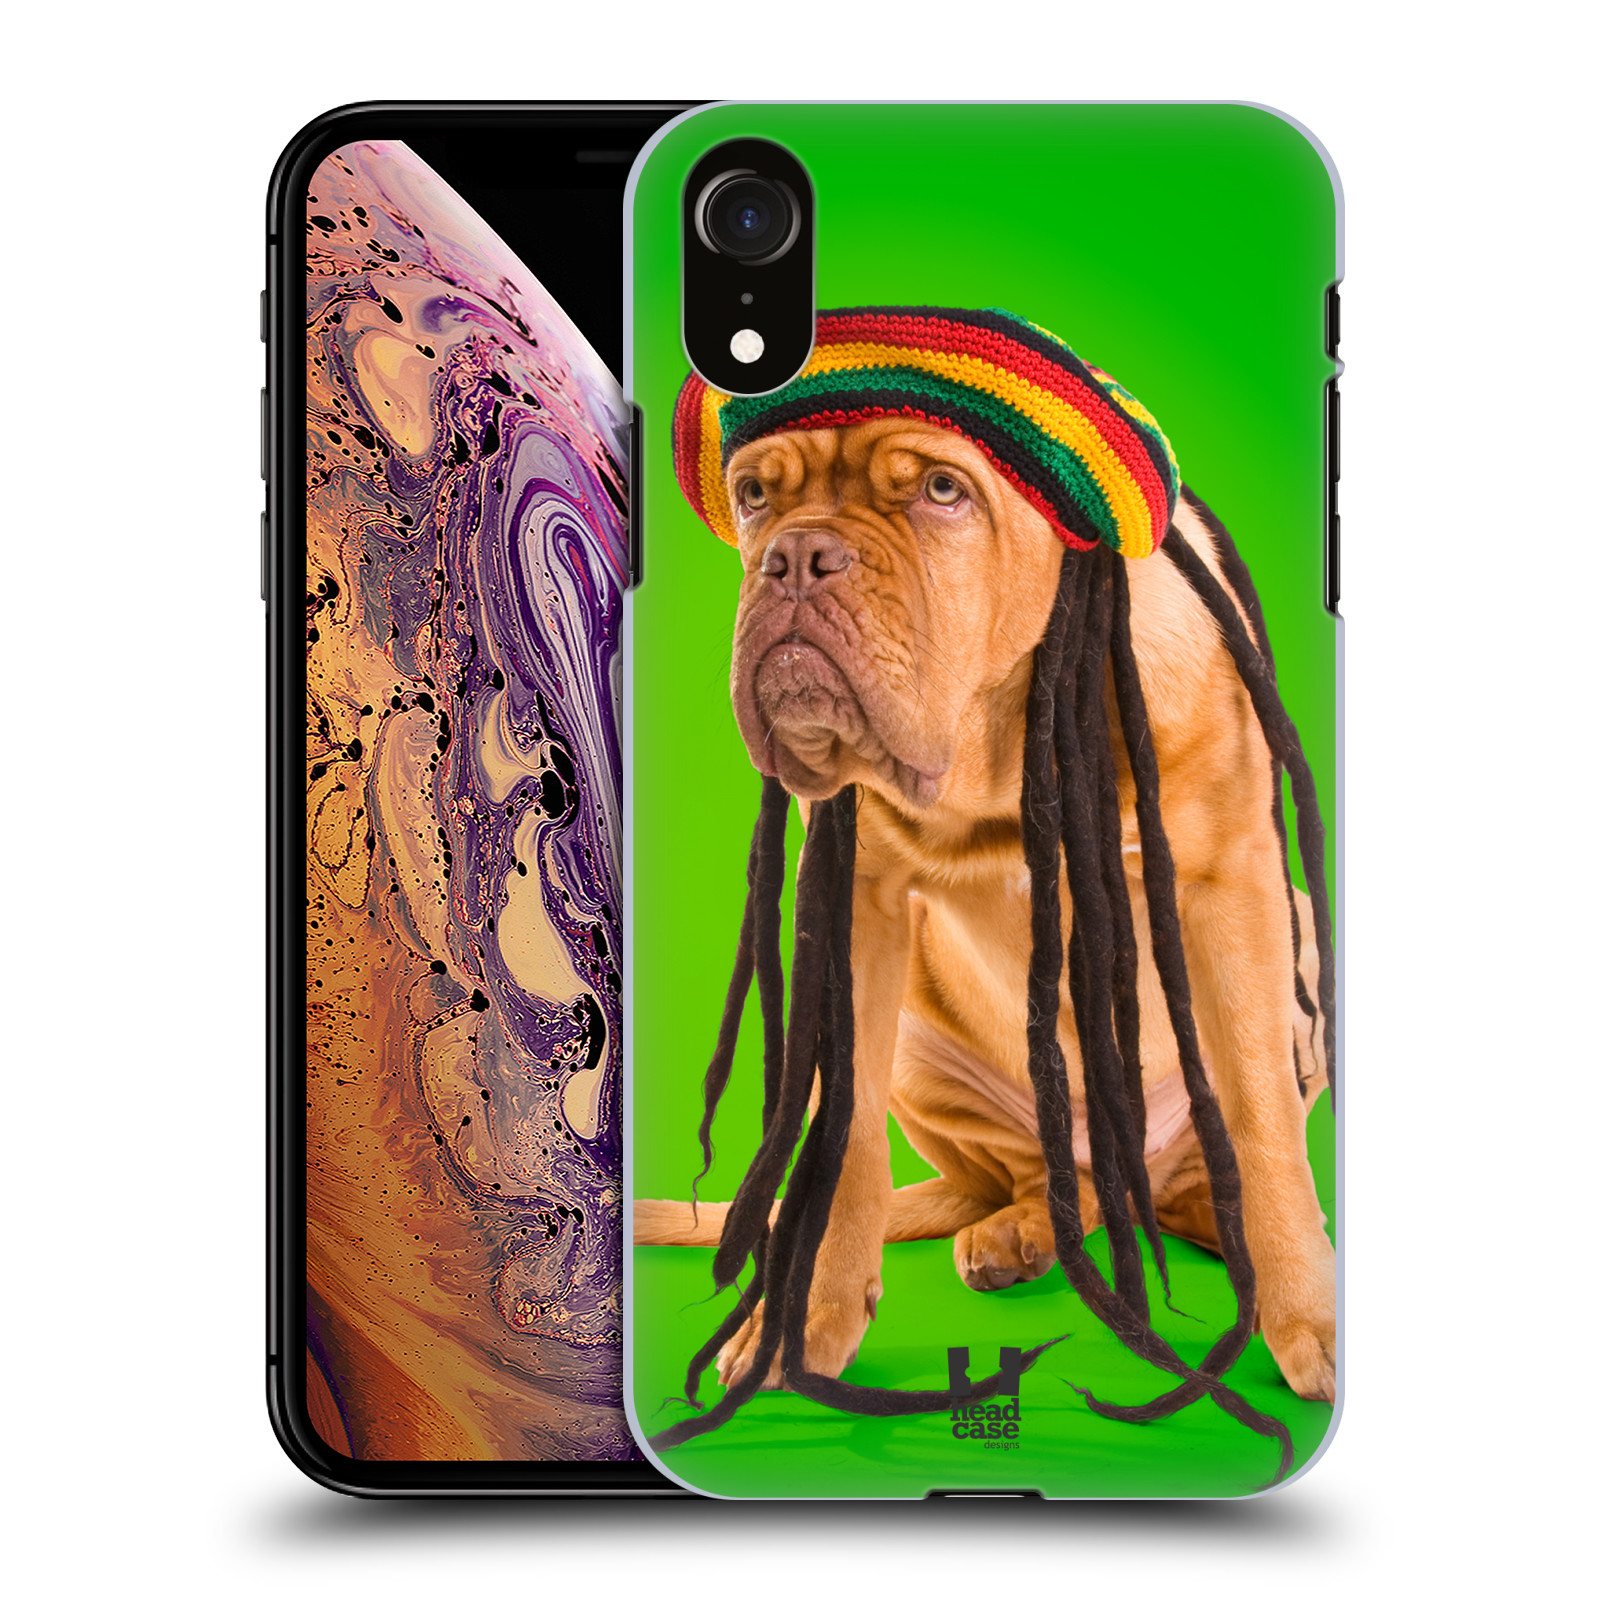 HEAD CASE plastový obal na mobil Apple Iphone XR vzor Legrační zvířátka pejsek dredy Rastafarián